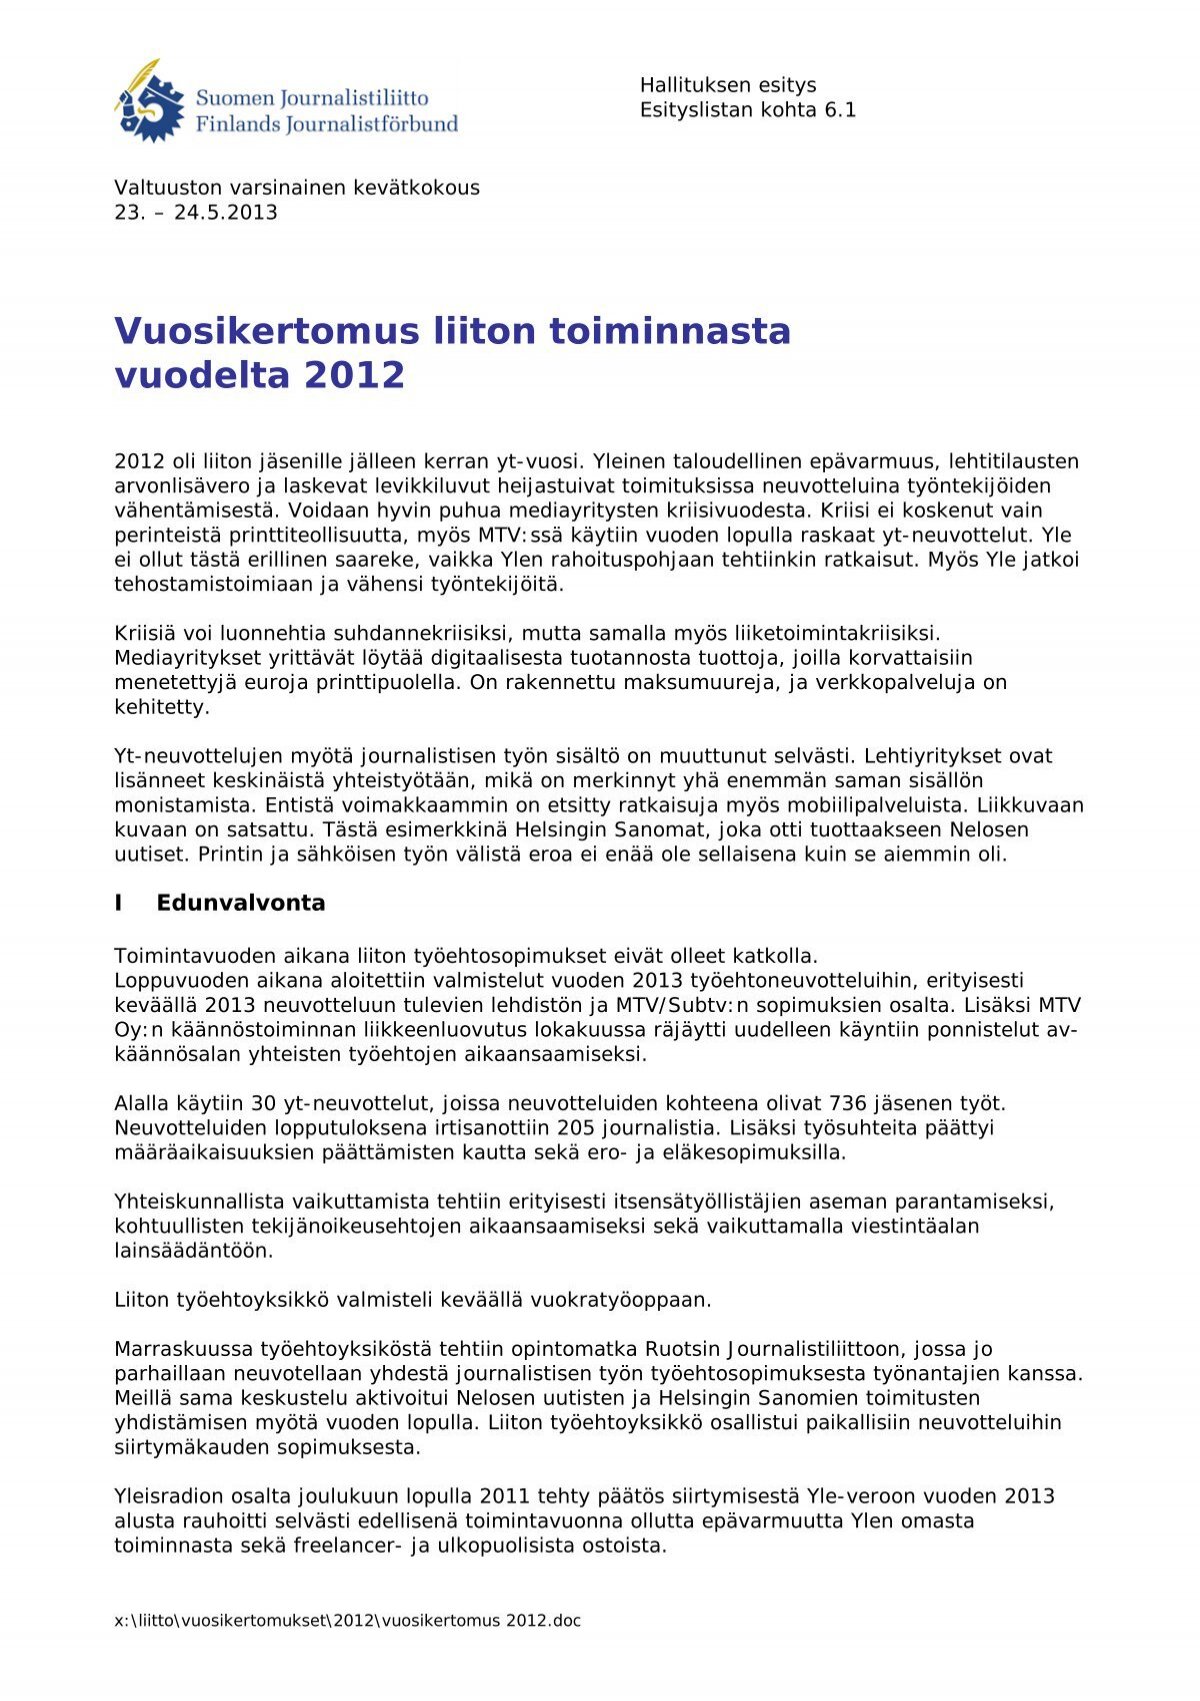 Vuosikertomus 2012 - Suomen Journalistiliitto